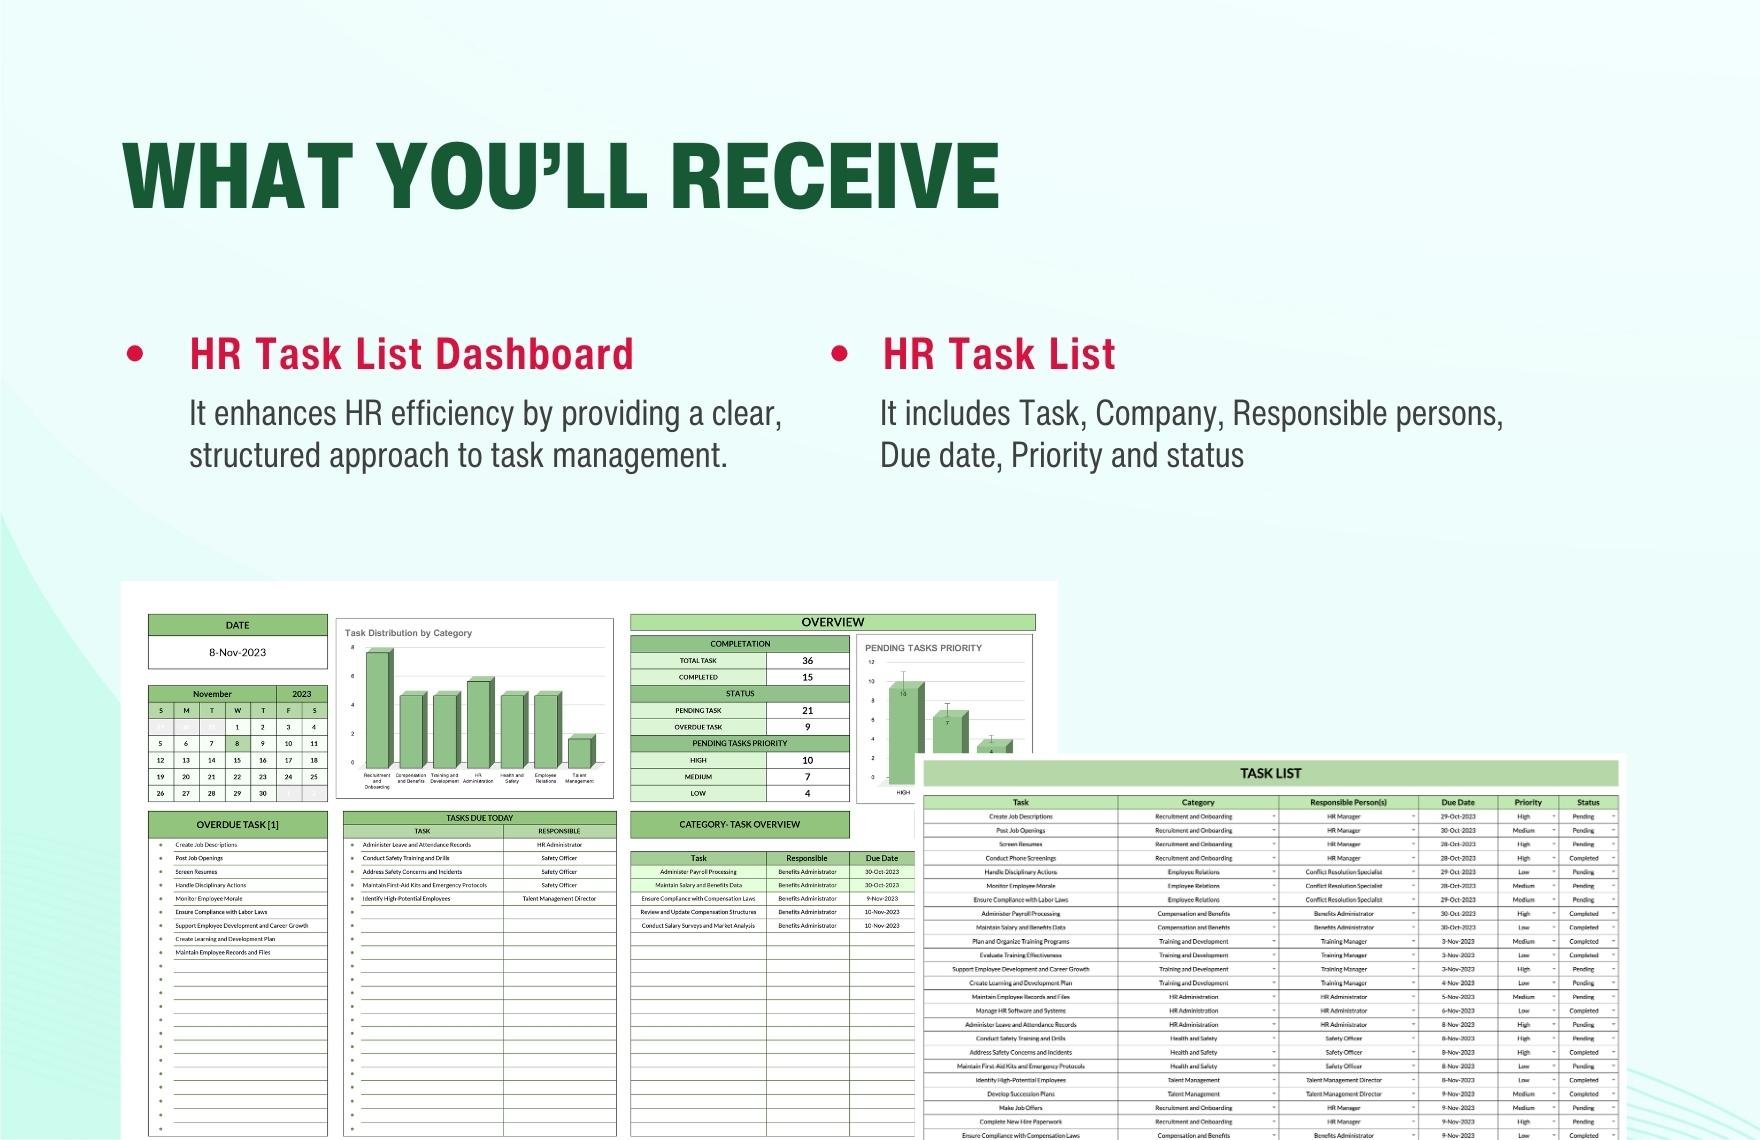 HR Task List Template